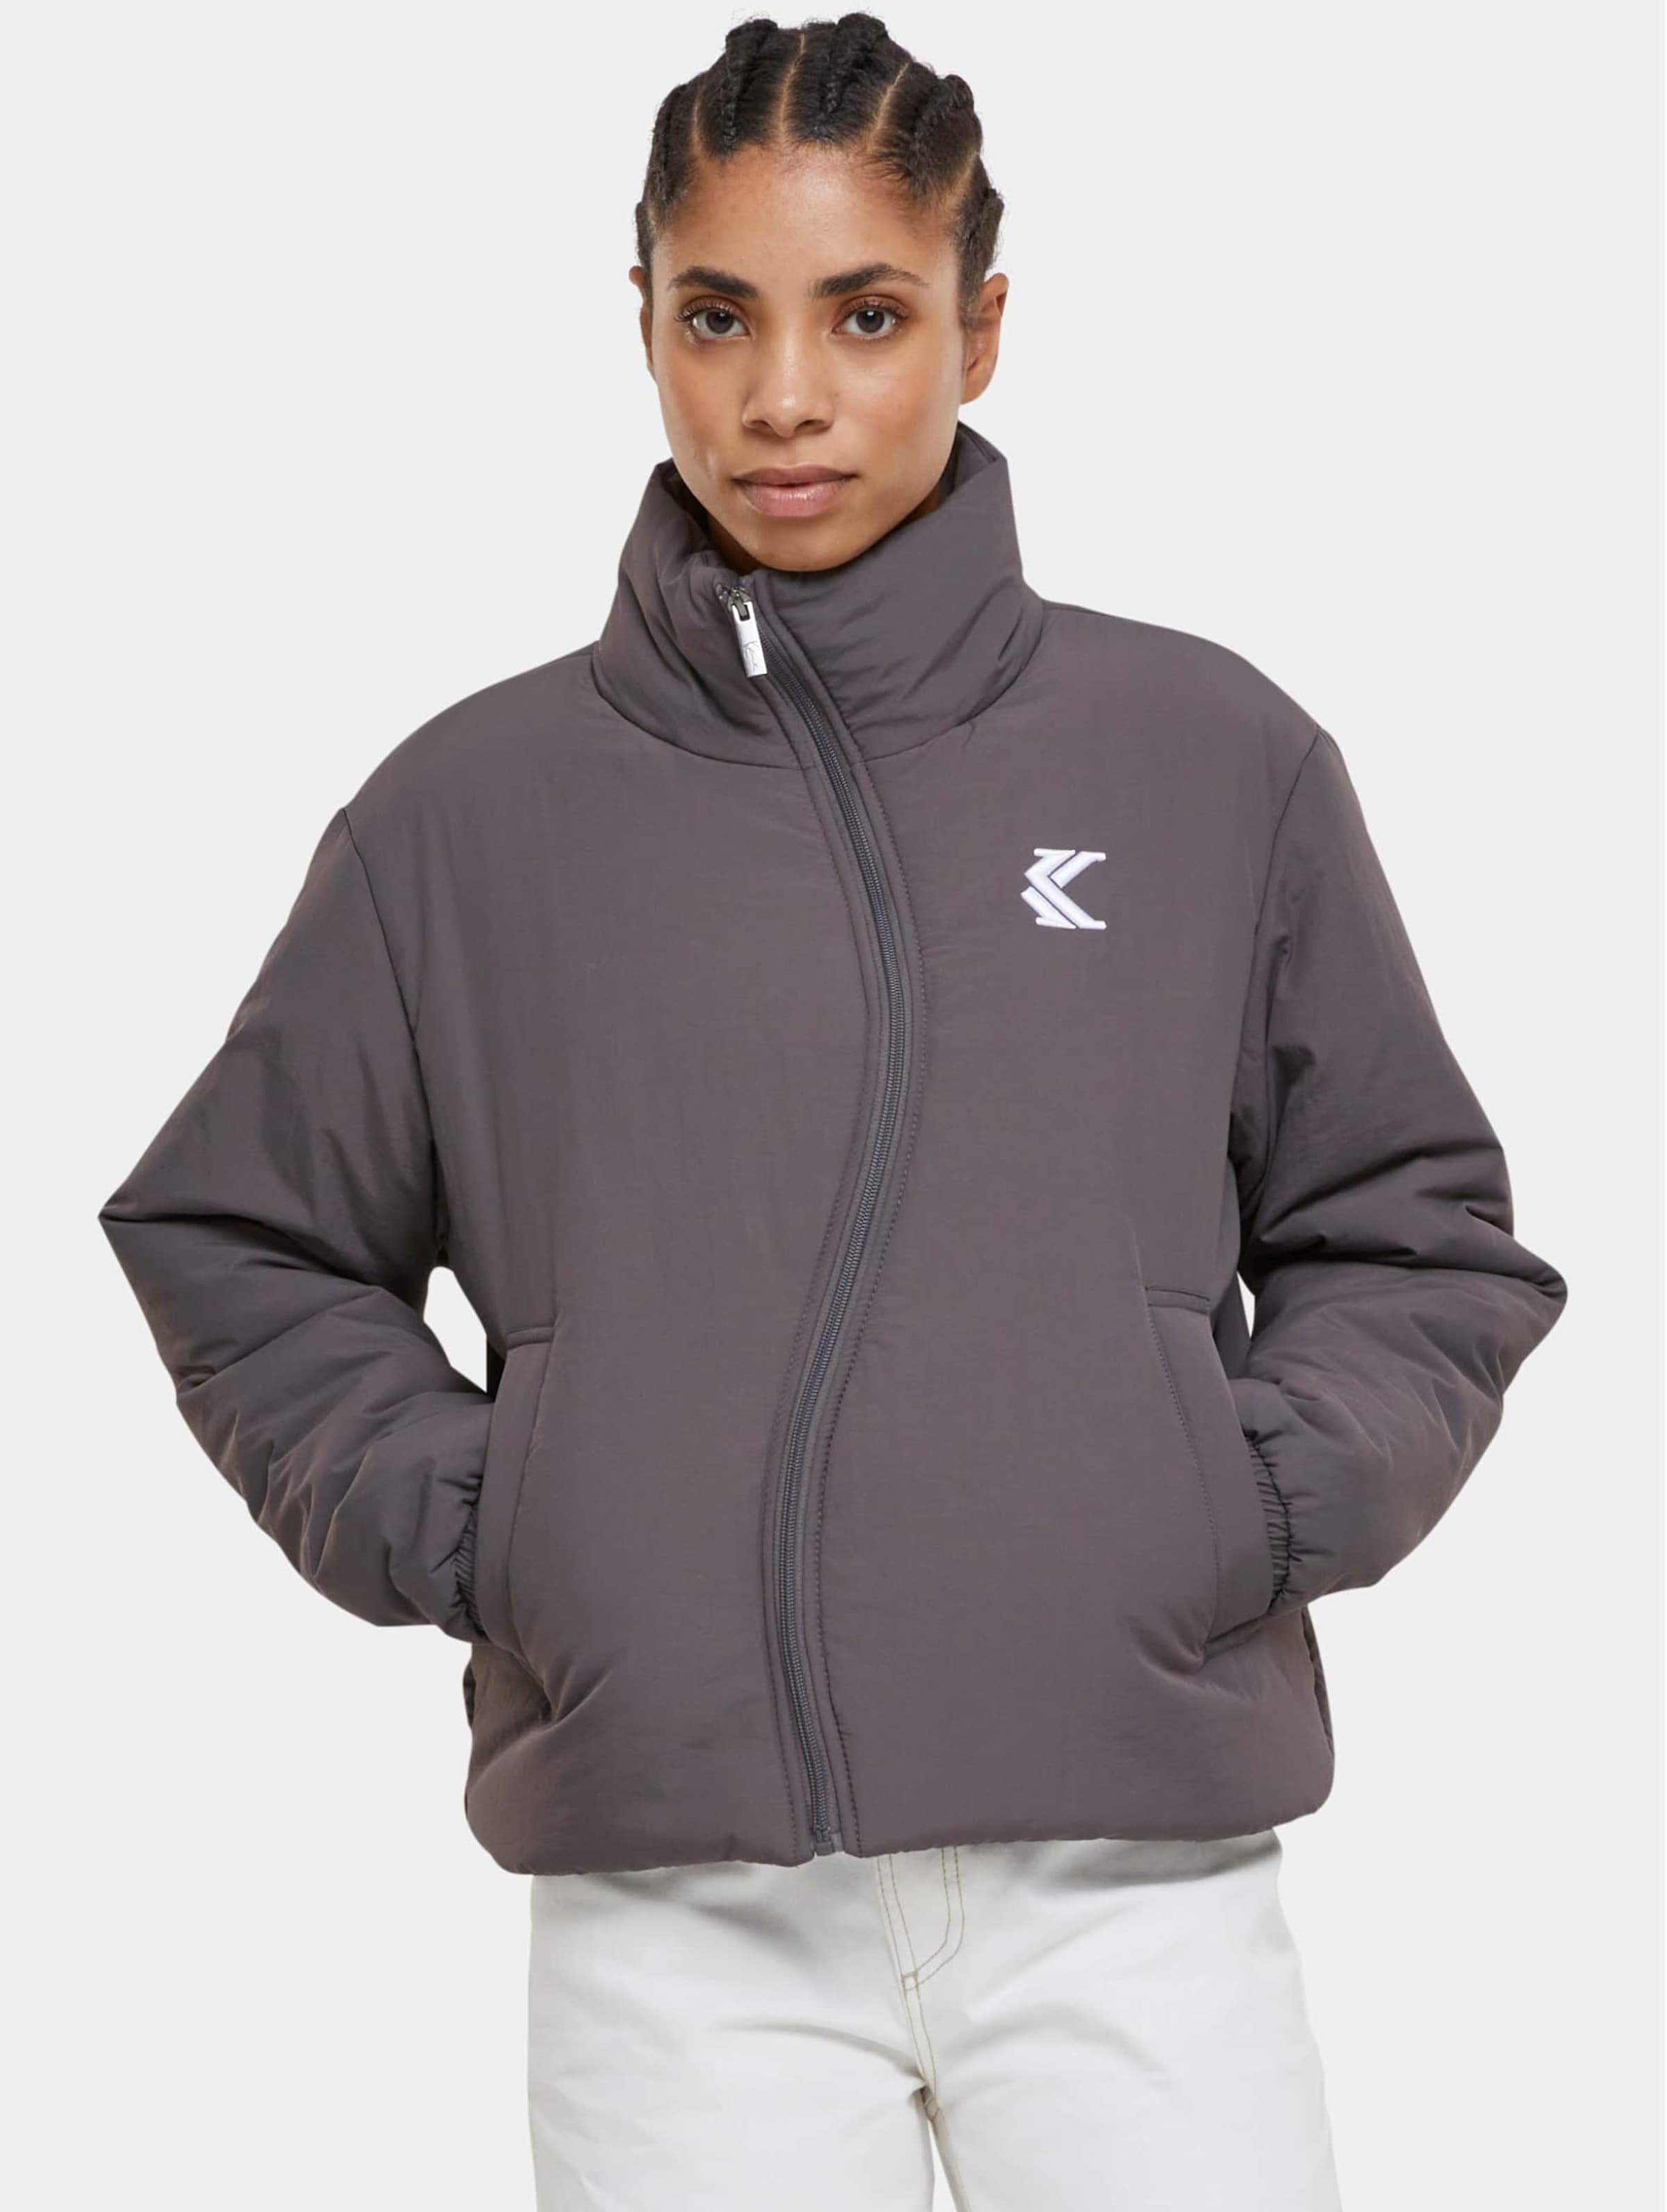 Karl Kani KW233-051-2 KK OG Wavy Puffer Jacket Vrouwen op kleur grijs, Maat XS